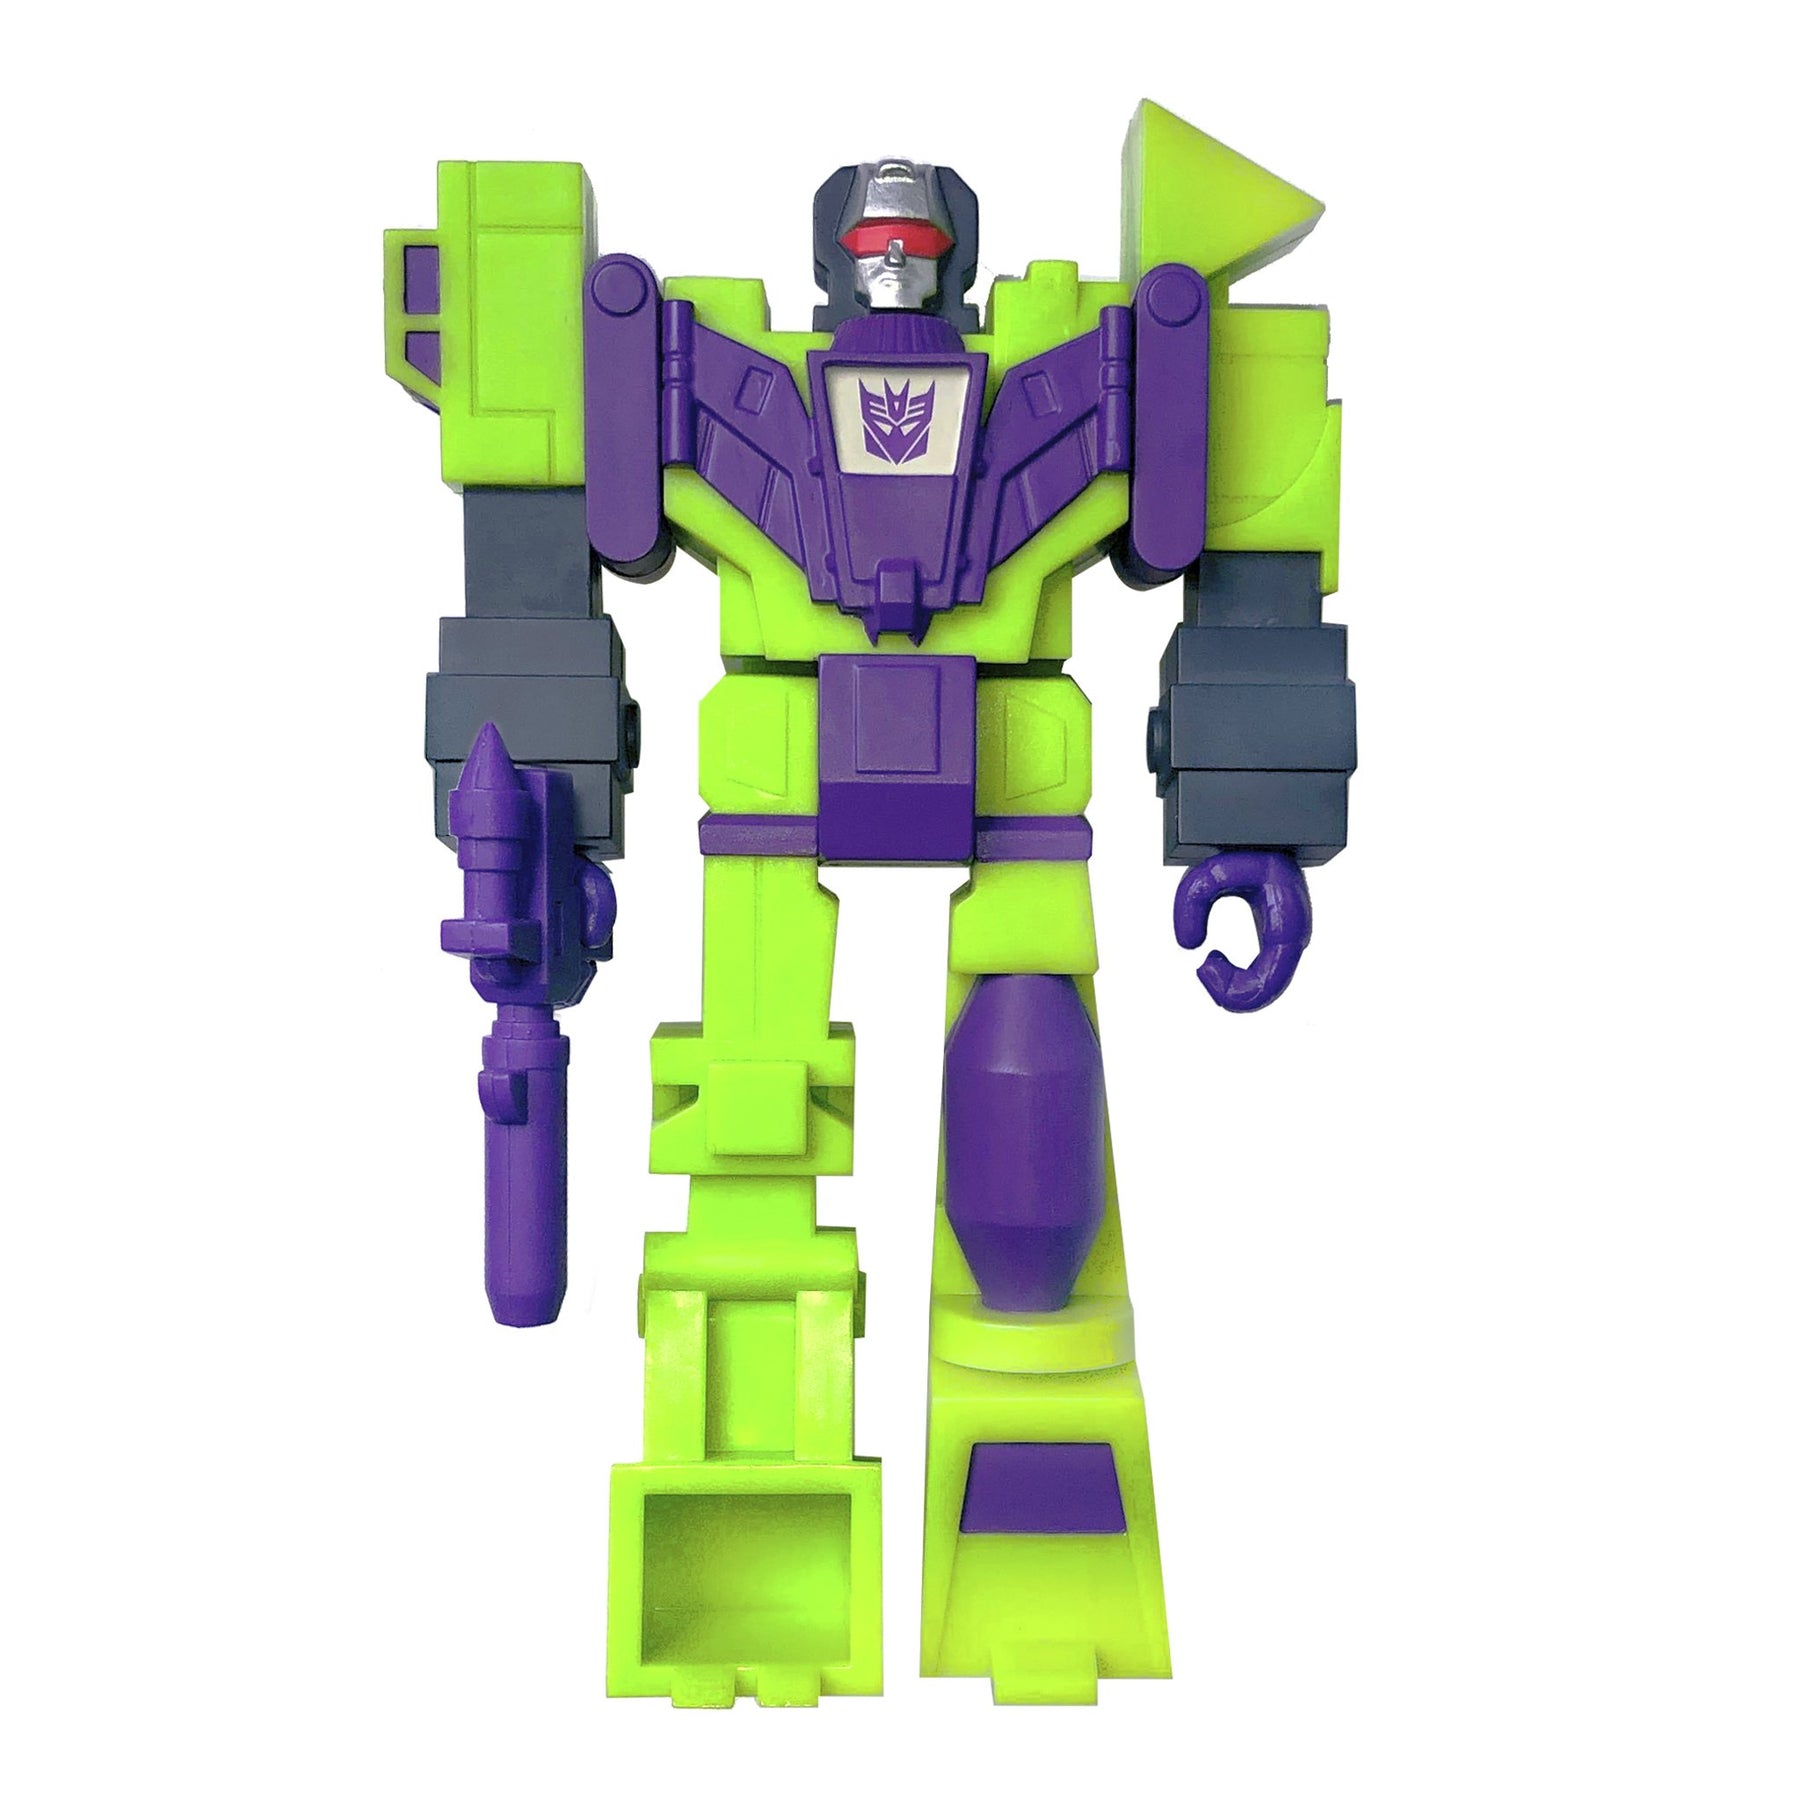 Transformers 6" ReAction Figure - Devastator - Zlc Collectibles